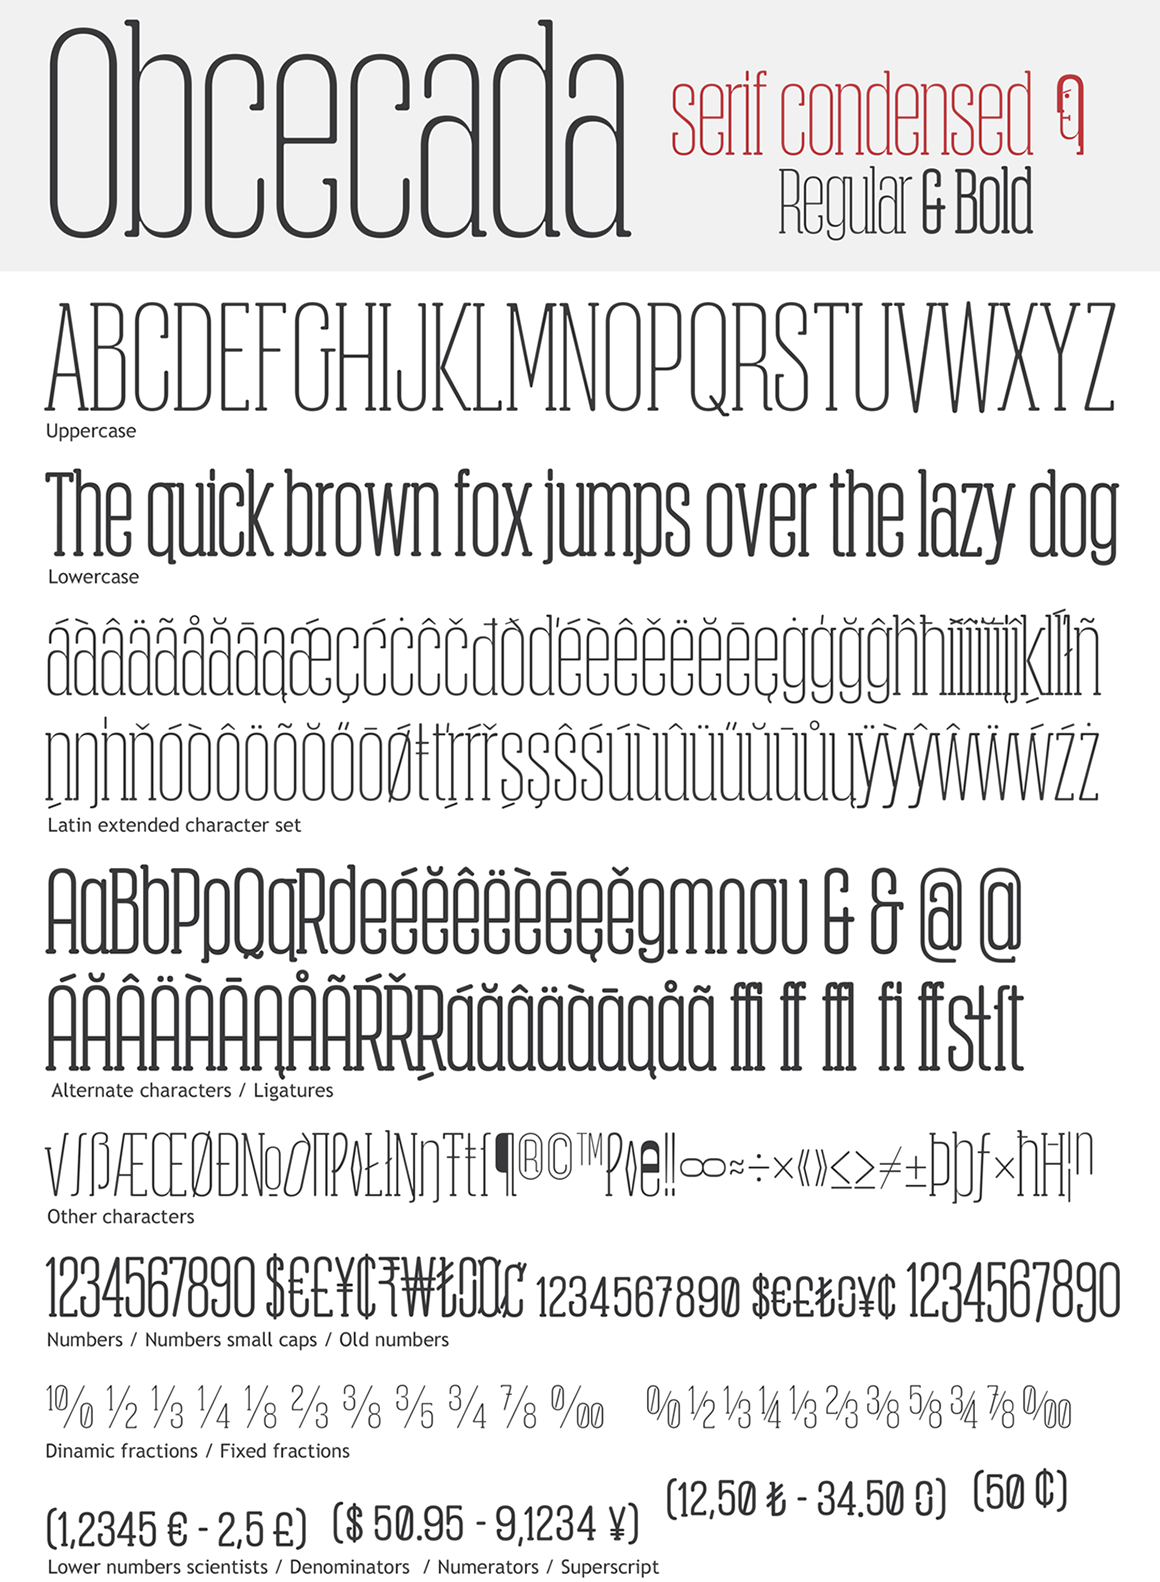 deFharo sans serif serif condensed display font Freelance spain Cyrillic greek